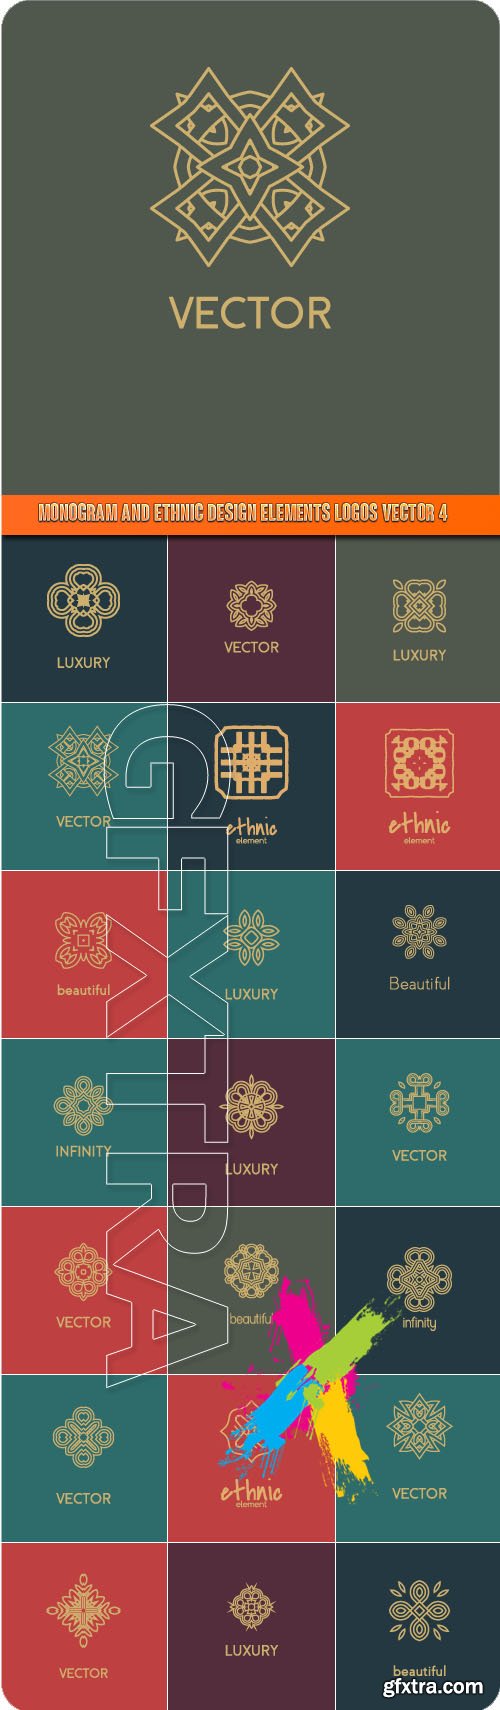 Monogram and ethnic design elements logos vector 4